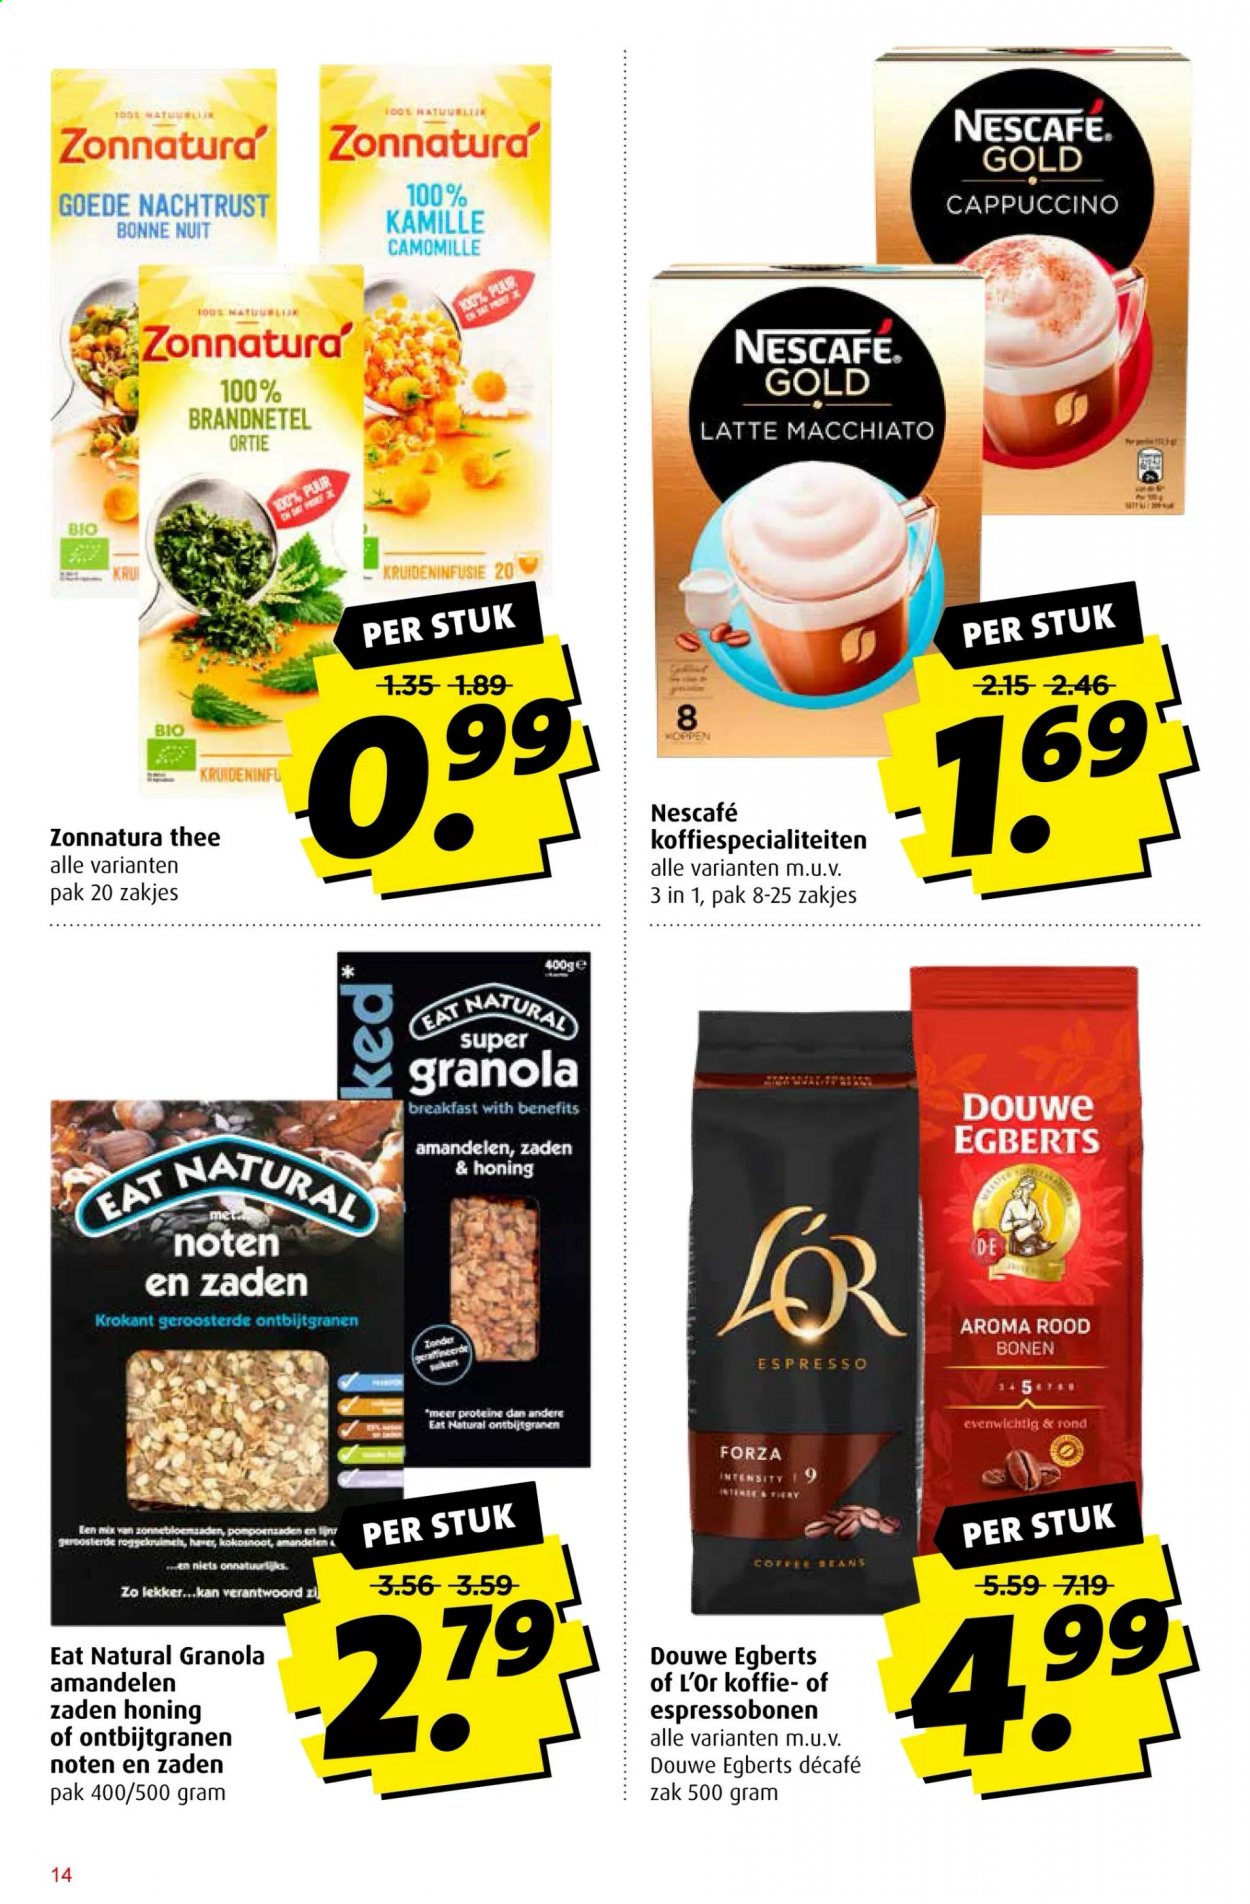 thumbnail - Boni-aanbieding - 17-2-2021 - 23-2-2021 -  producten in de aanbieding - kokosnoot, granola, amandelen, Douwe Egberts, koffie, L’or, Espresso. Pagina 14.